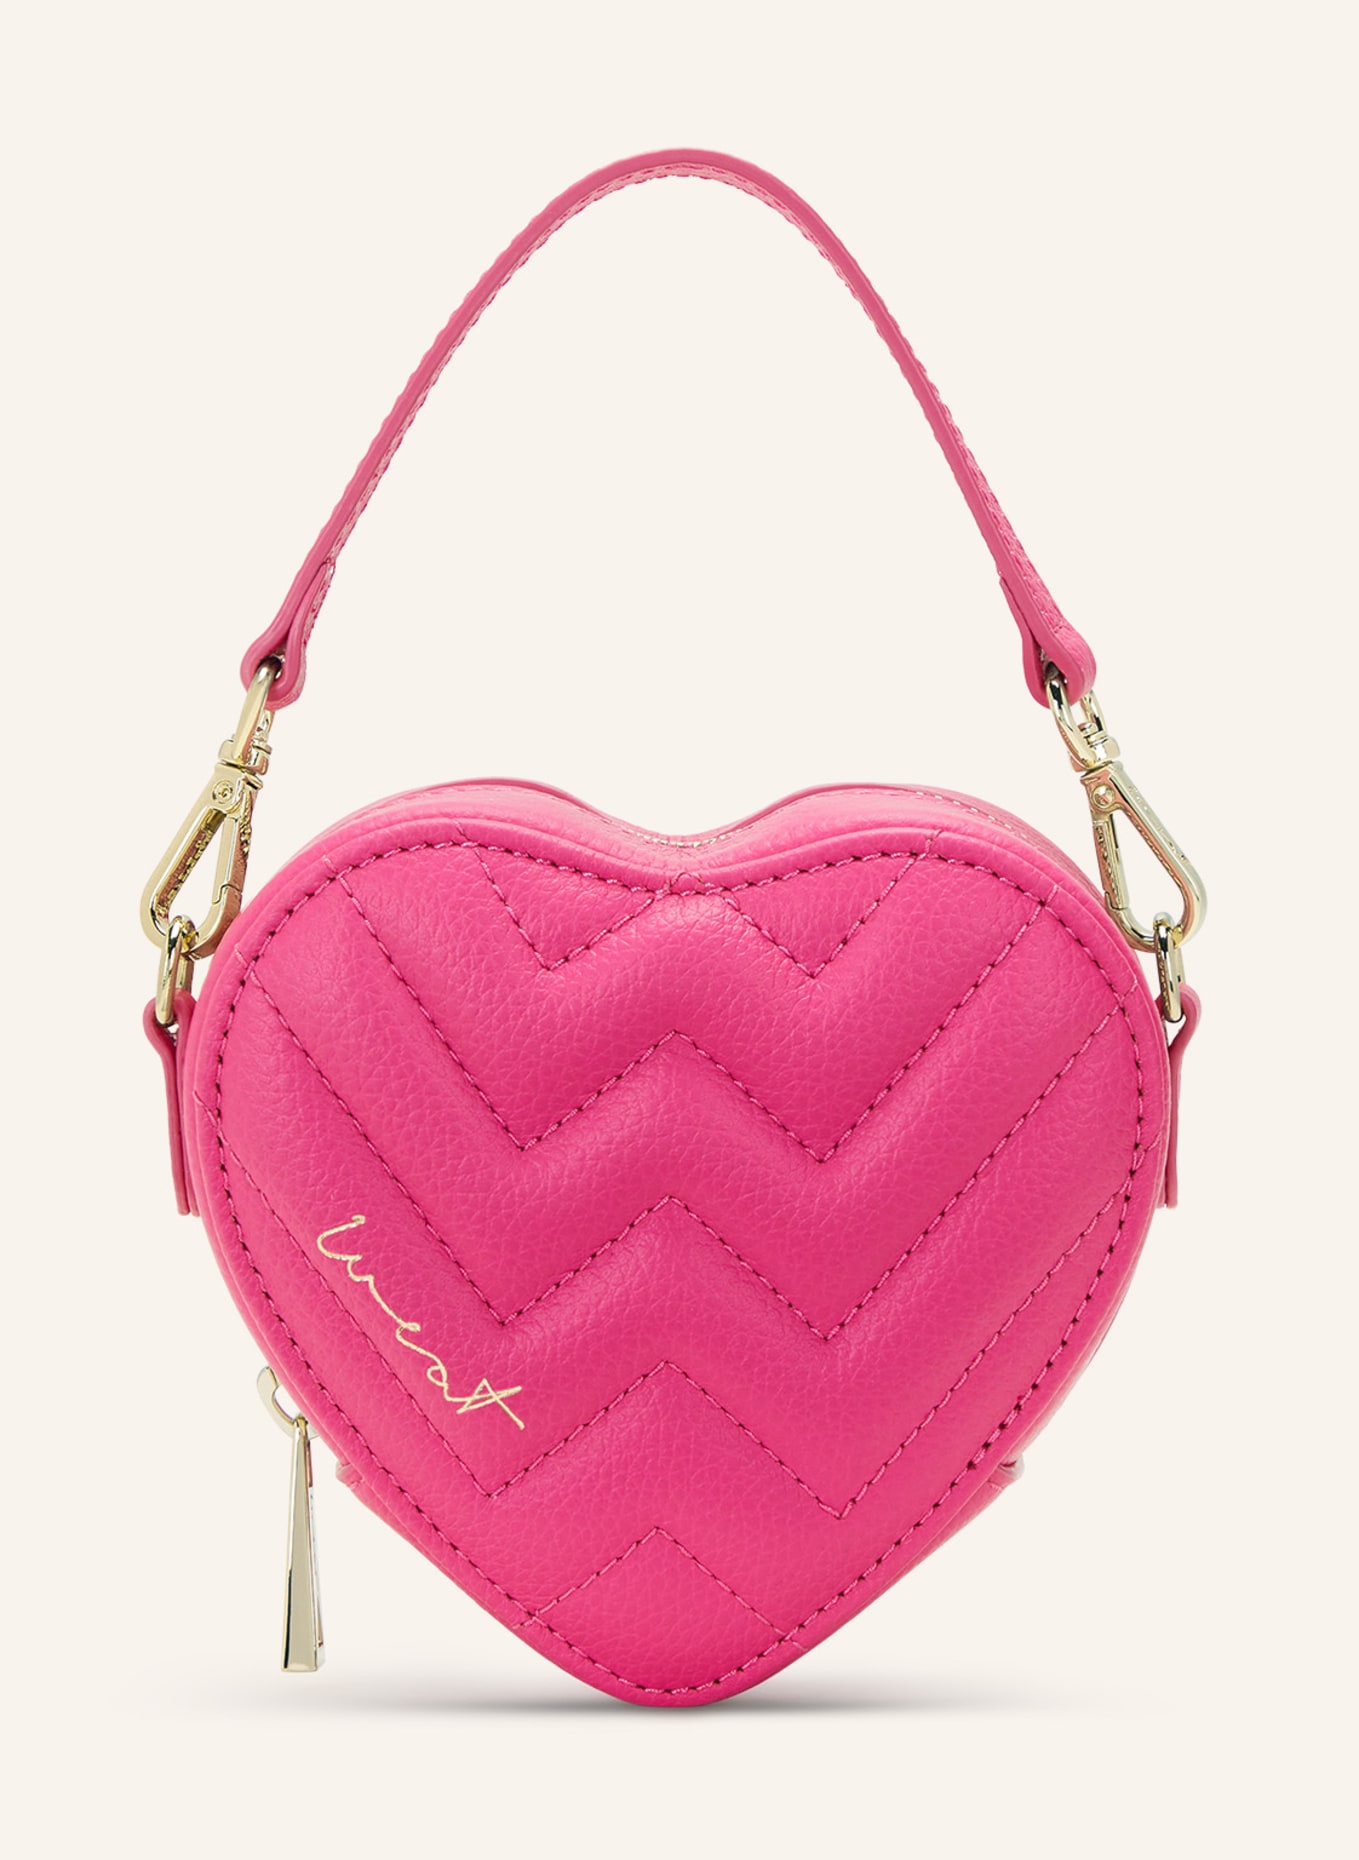 WEAT Handtasche MINI HEART, Farbe: PINK (Bild 1)